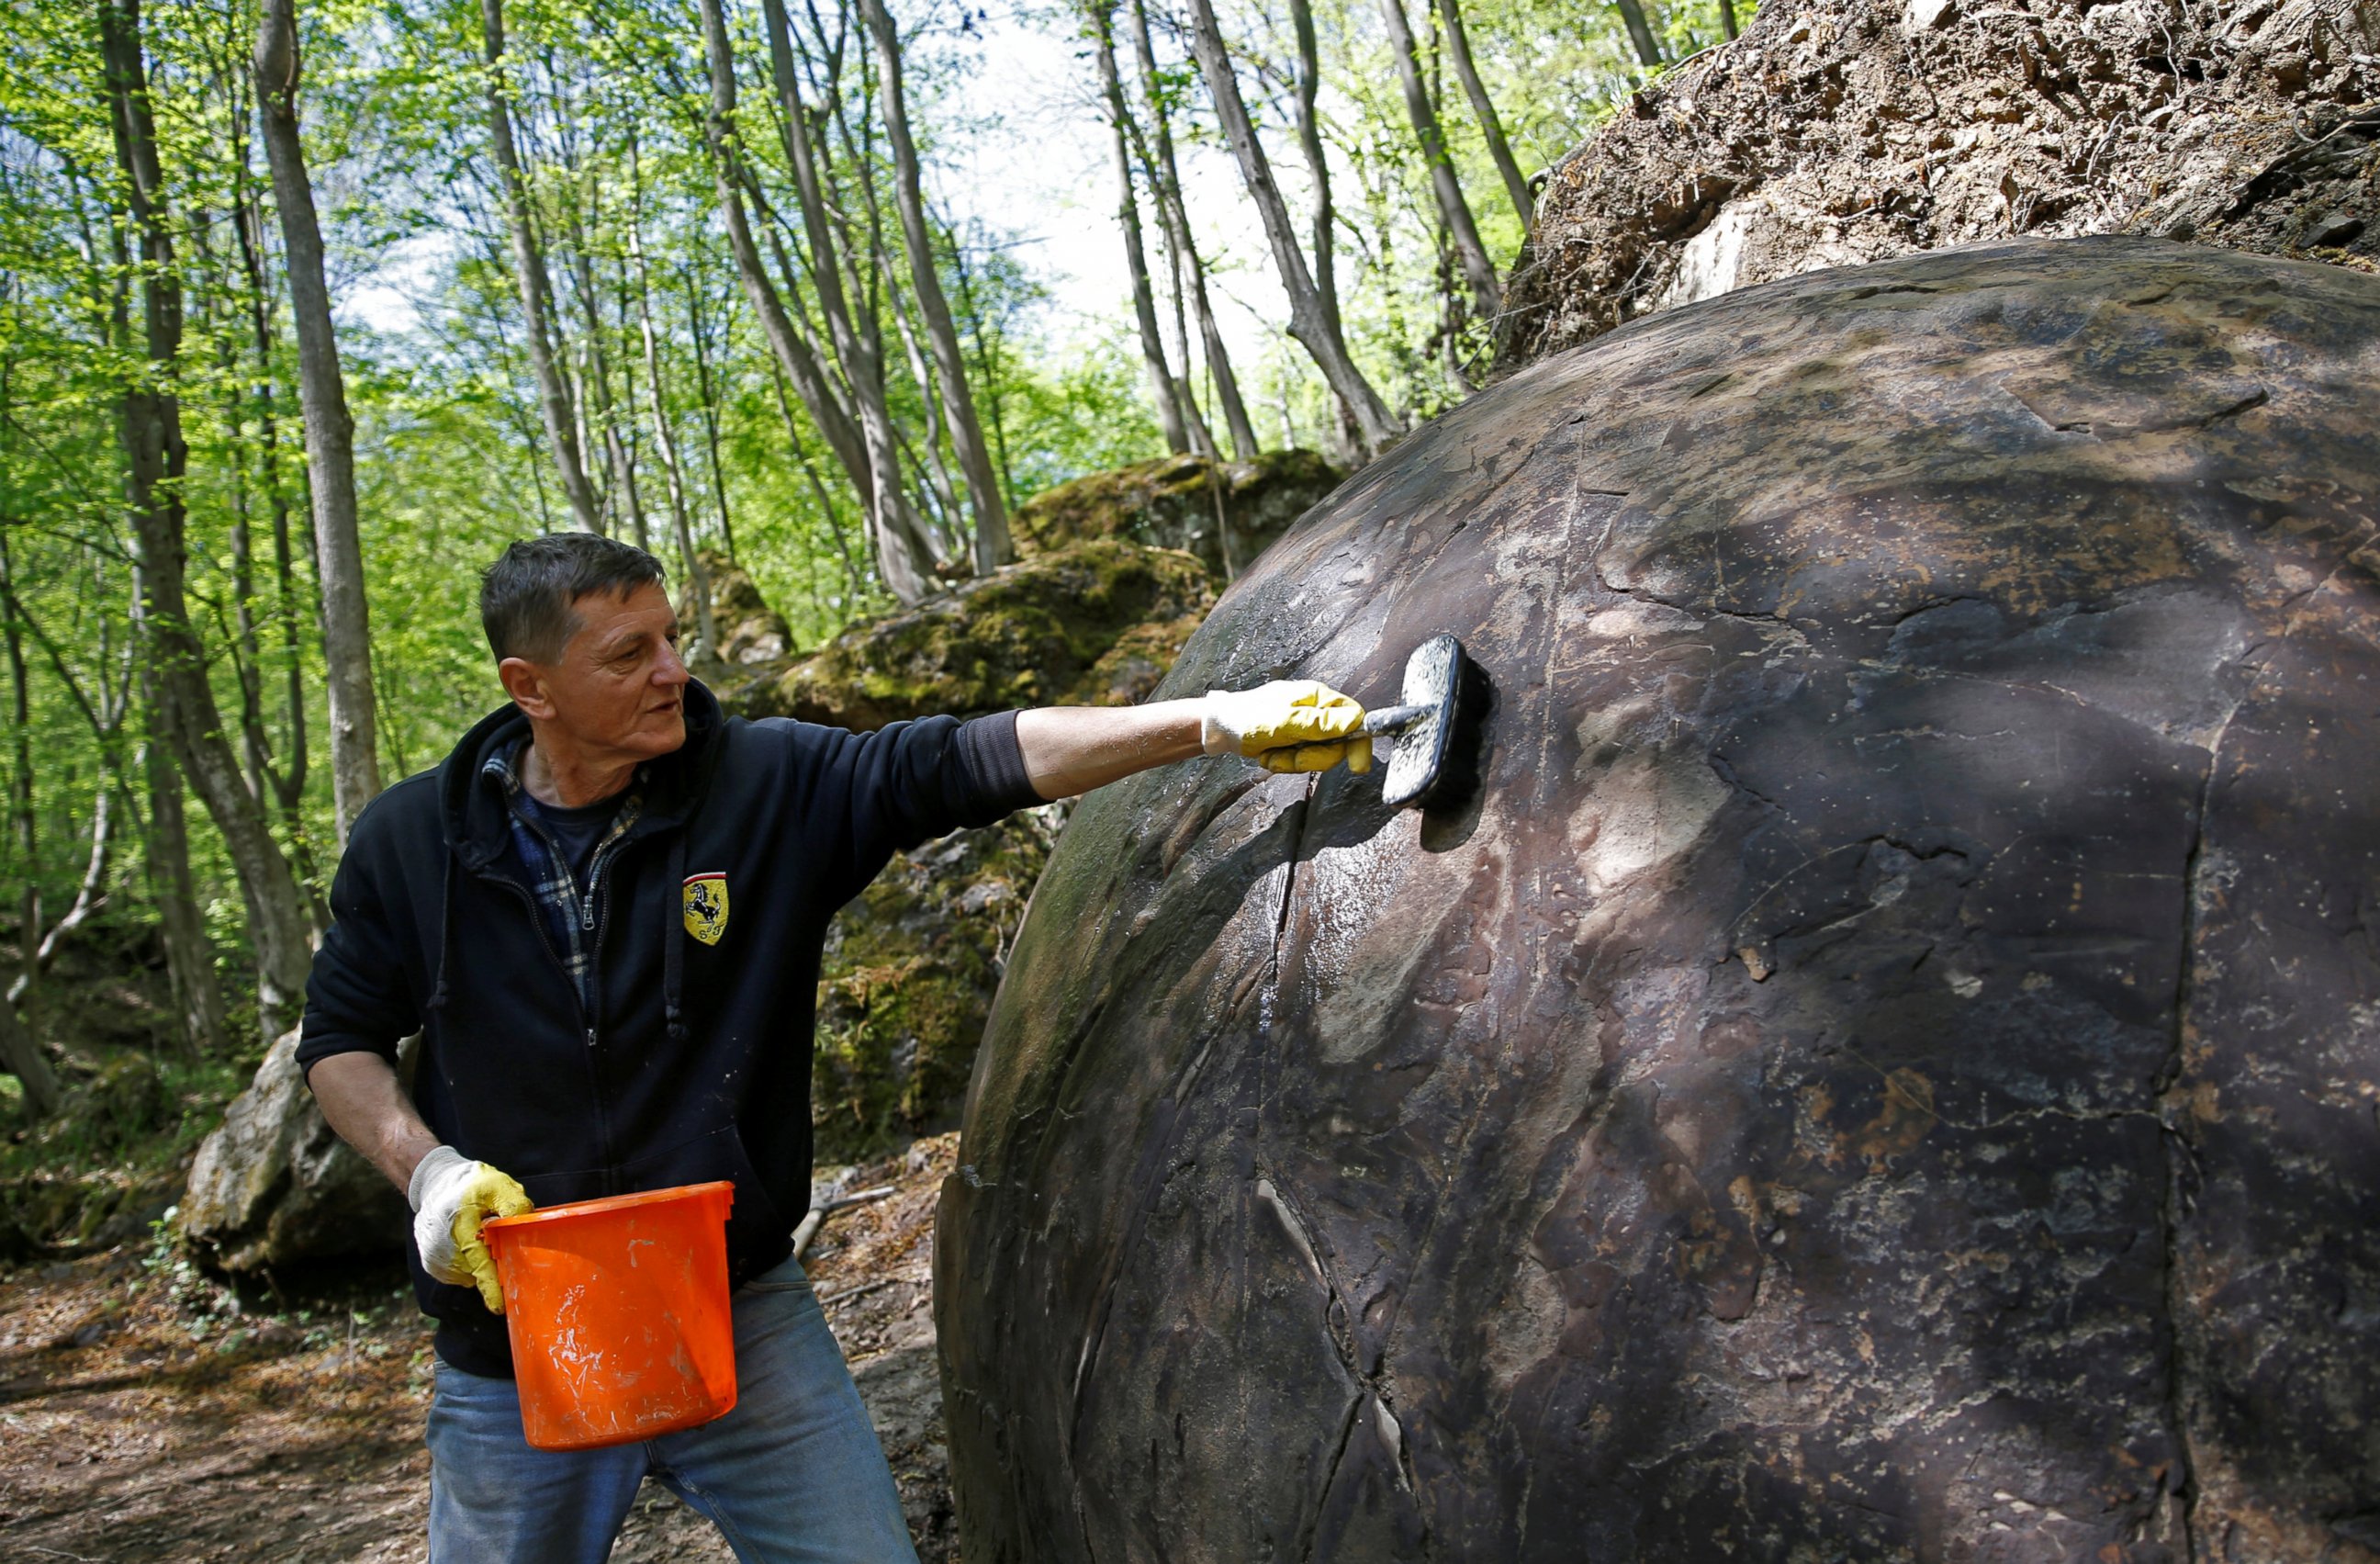 PHOTO: Suad Keserovic cleans a stone ball in Podubravlje village near Zavidovici, Bosnia and Herzegovina April 11, 2016.